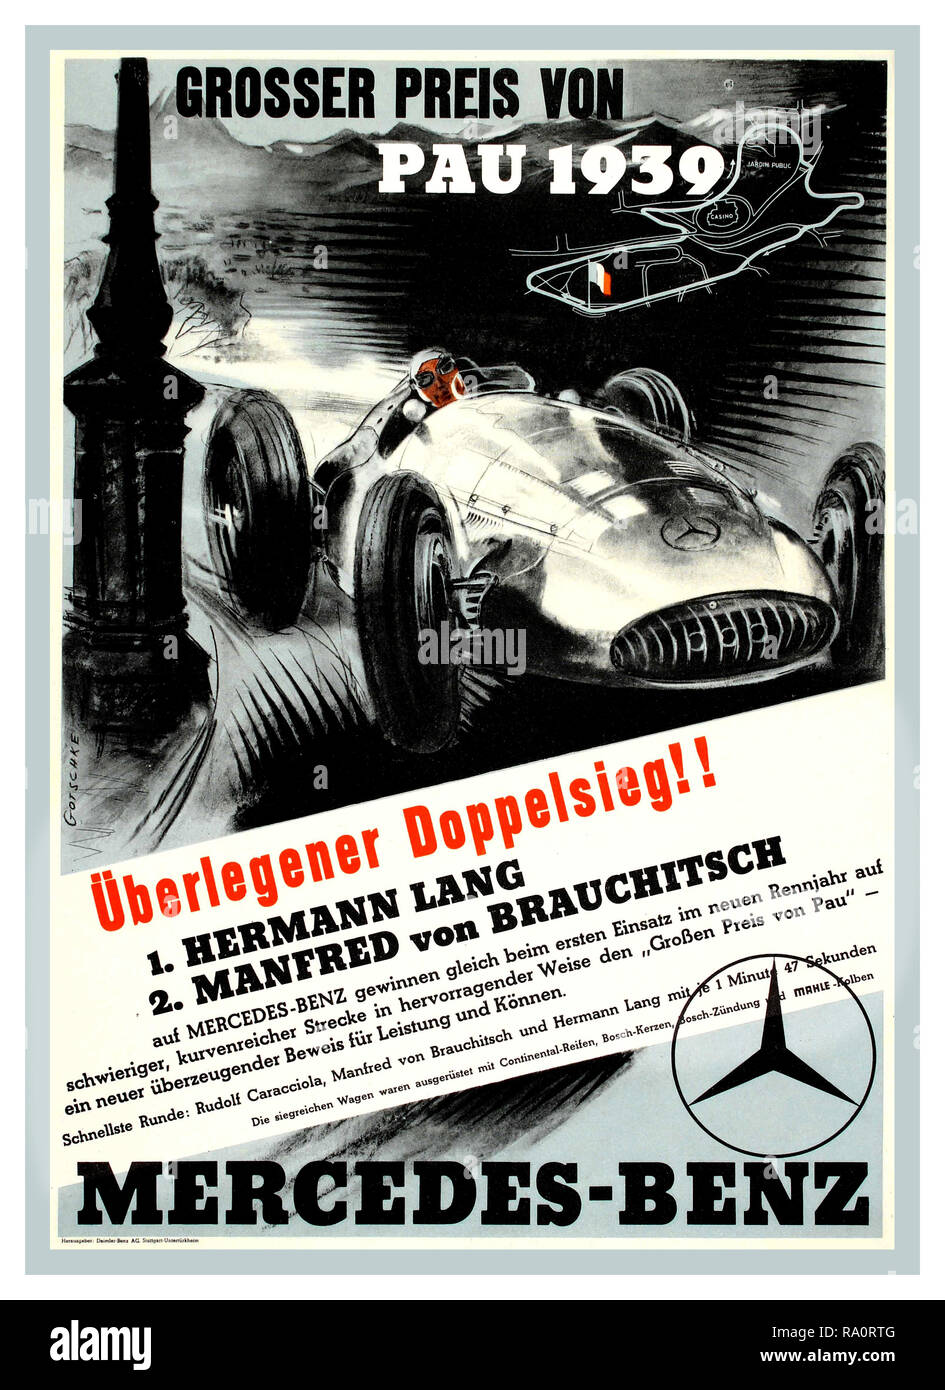 Vintage German Motor Racing Poster 1939 'Grosser Preis von Pau 1939' -  Mercedes Benz motor racing poster. Original vintage motorsport poster  promoting Mercedes-Benz at the Grosser Preis von Pau 1939, featuring German